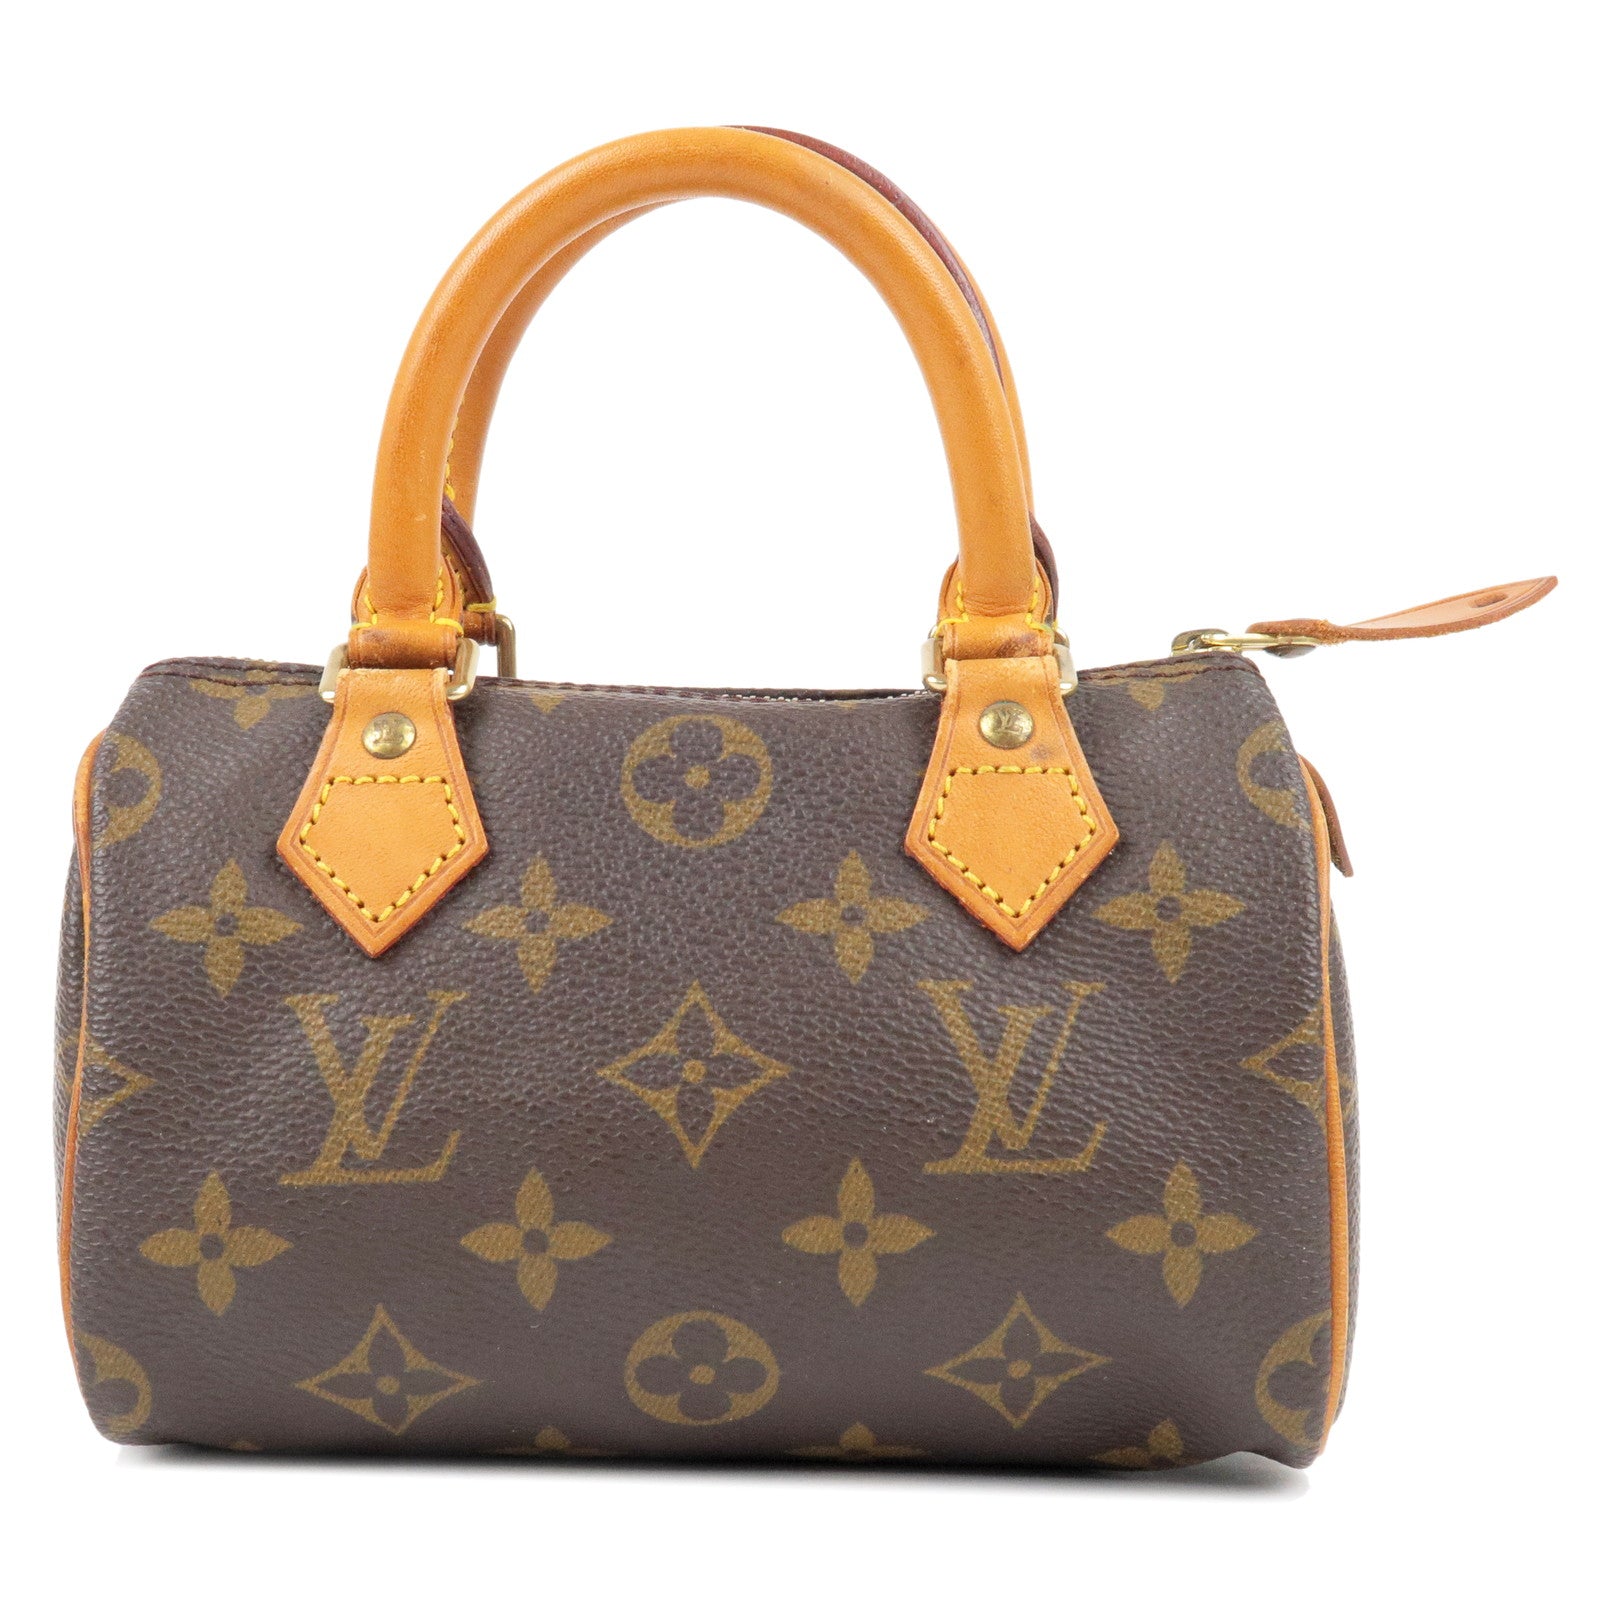 SOLD OUT Louis Vuitton Kleber PM Epi Leather Noir Black 3-way Handbag - Used